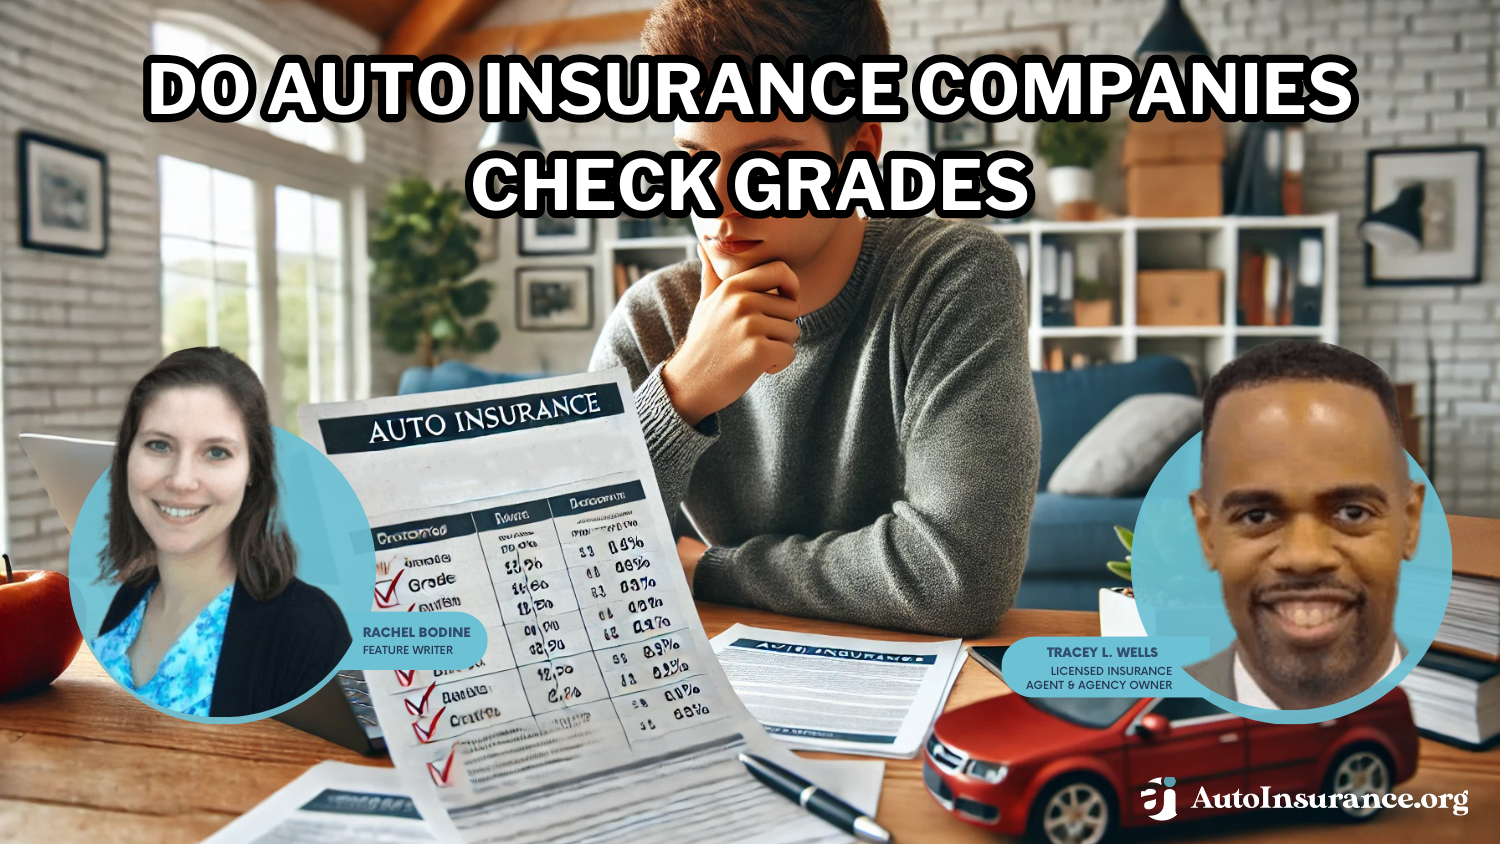 Do auto insurance companies check grades?